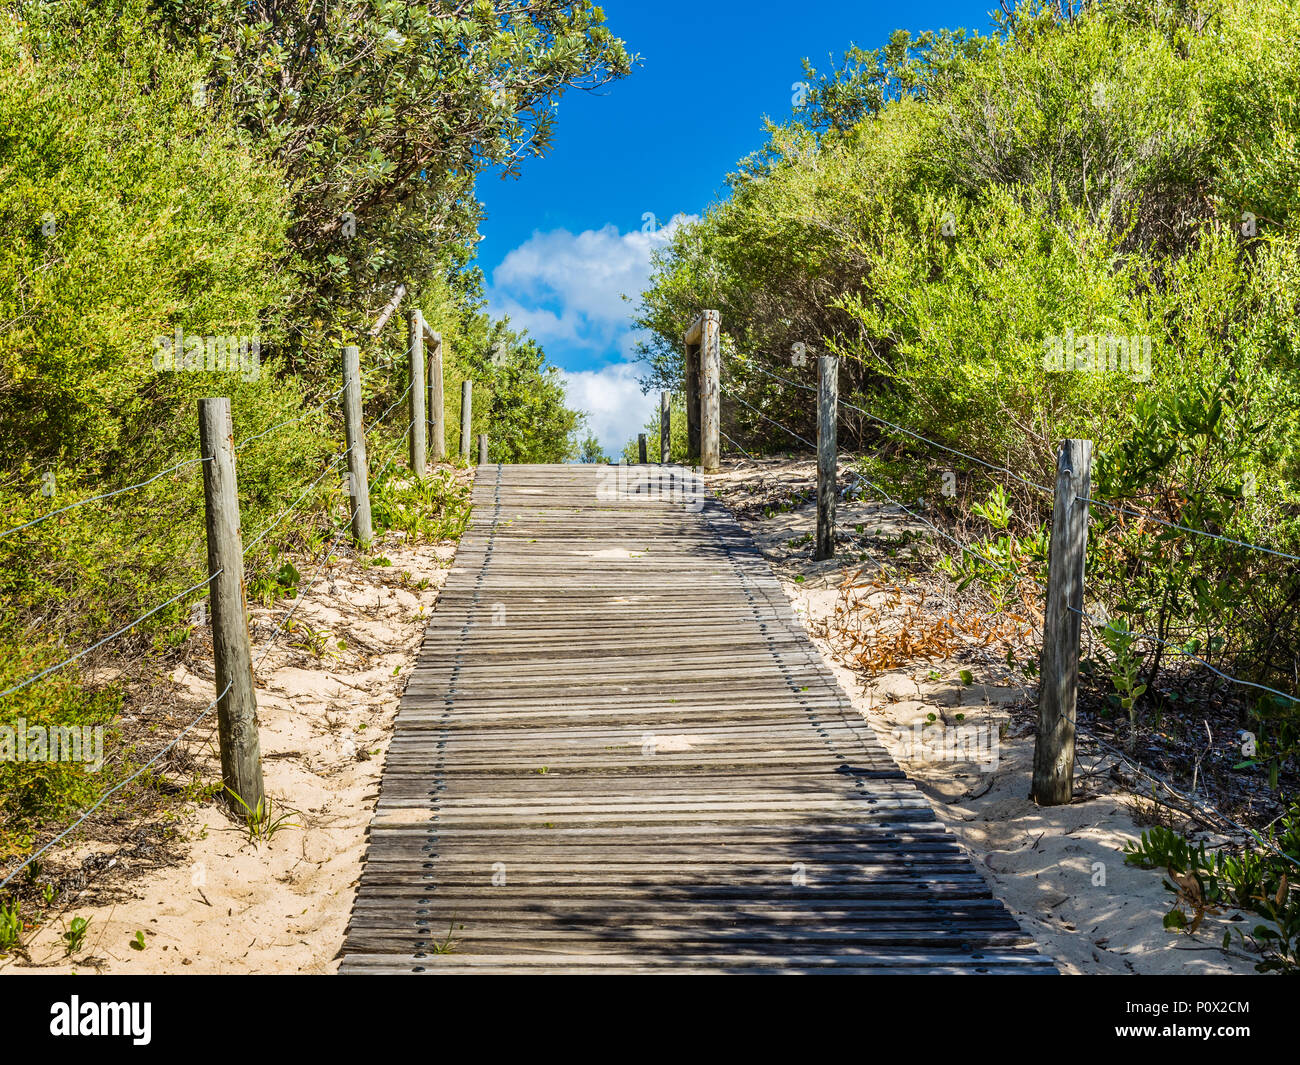 Wooden walkway to Zenith Beach, NSW, Australia, surrounded by foliage. Stock Photo